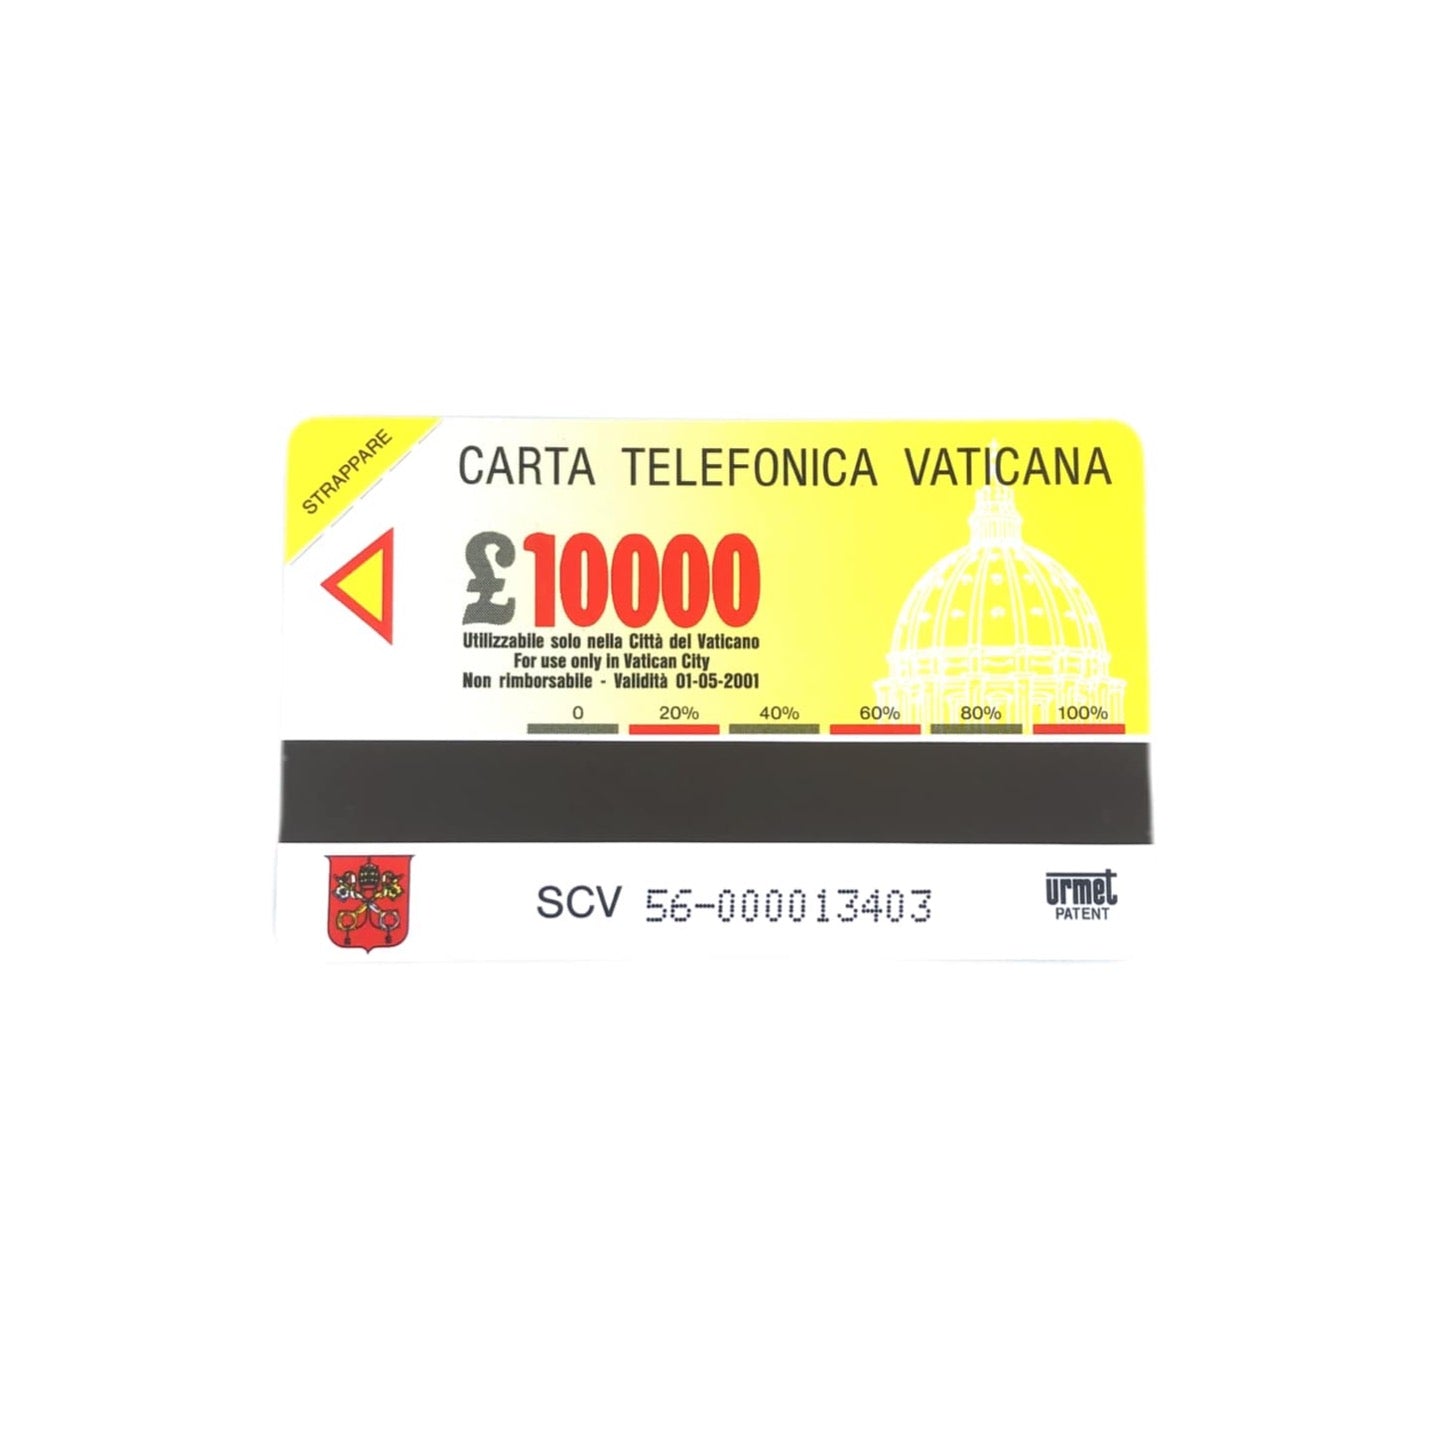 Vatican State phone card n. 56 - Galleria Mariana